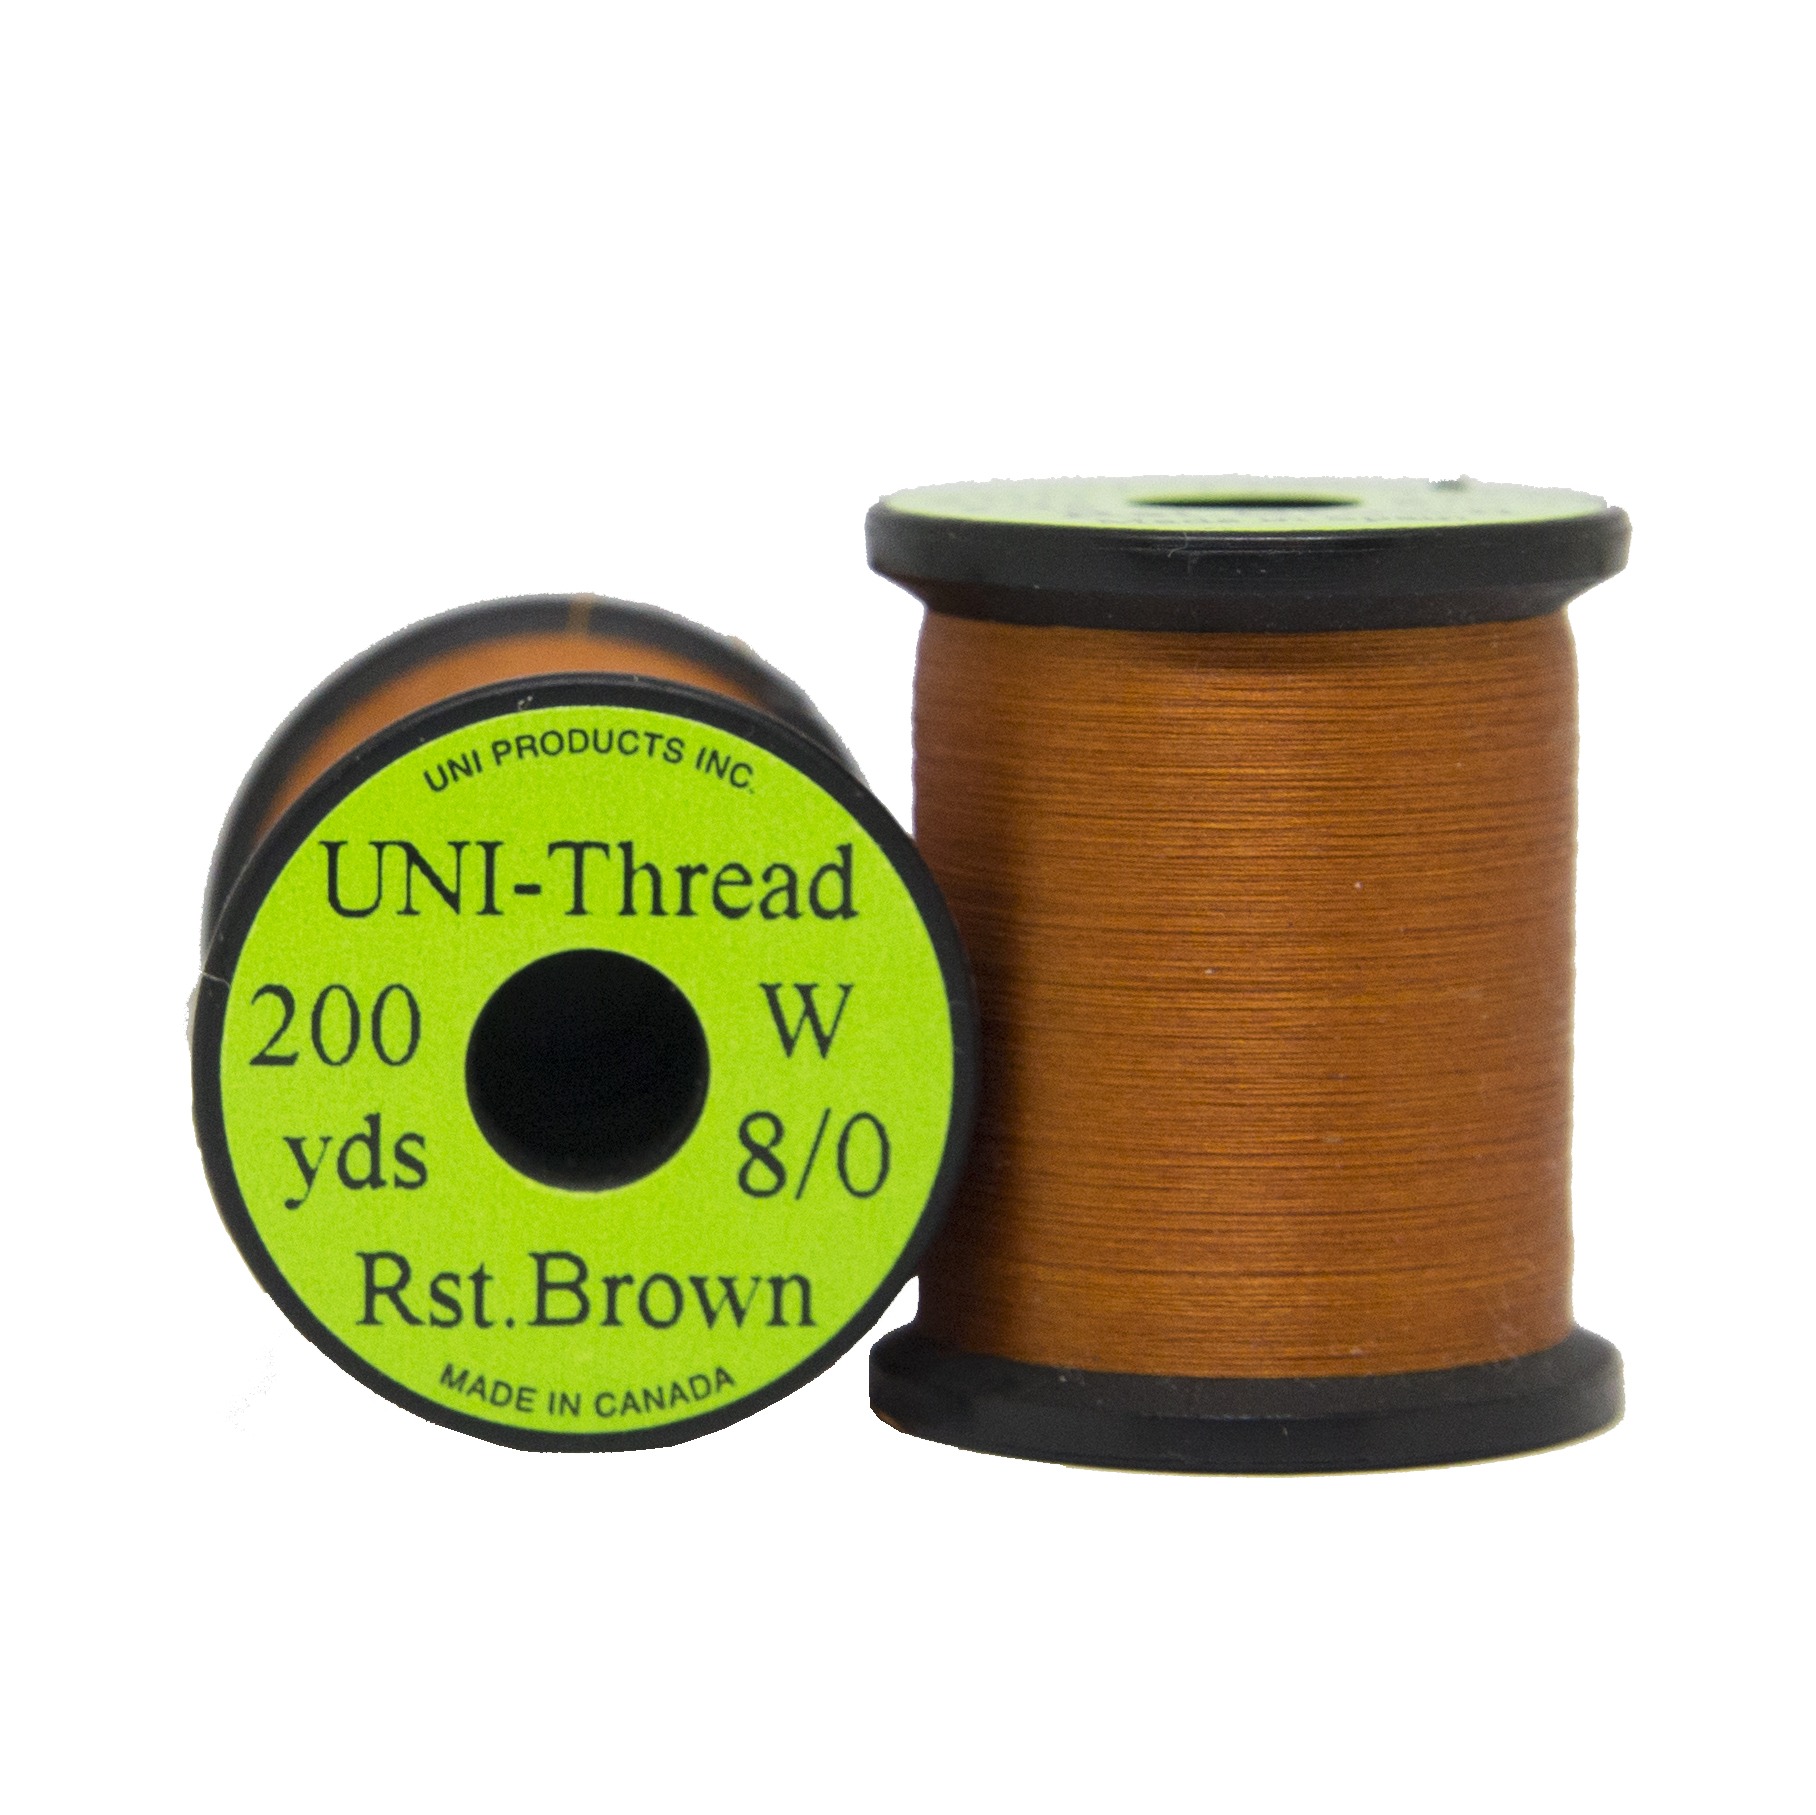 UNI Thread 8/0 200yds - Rusty brown